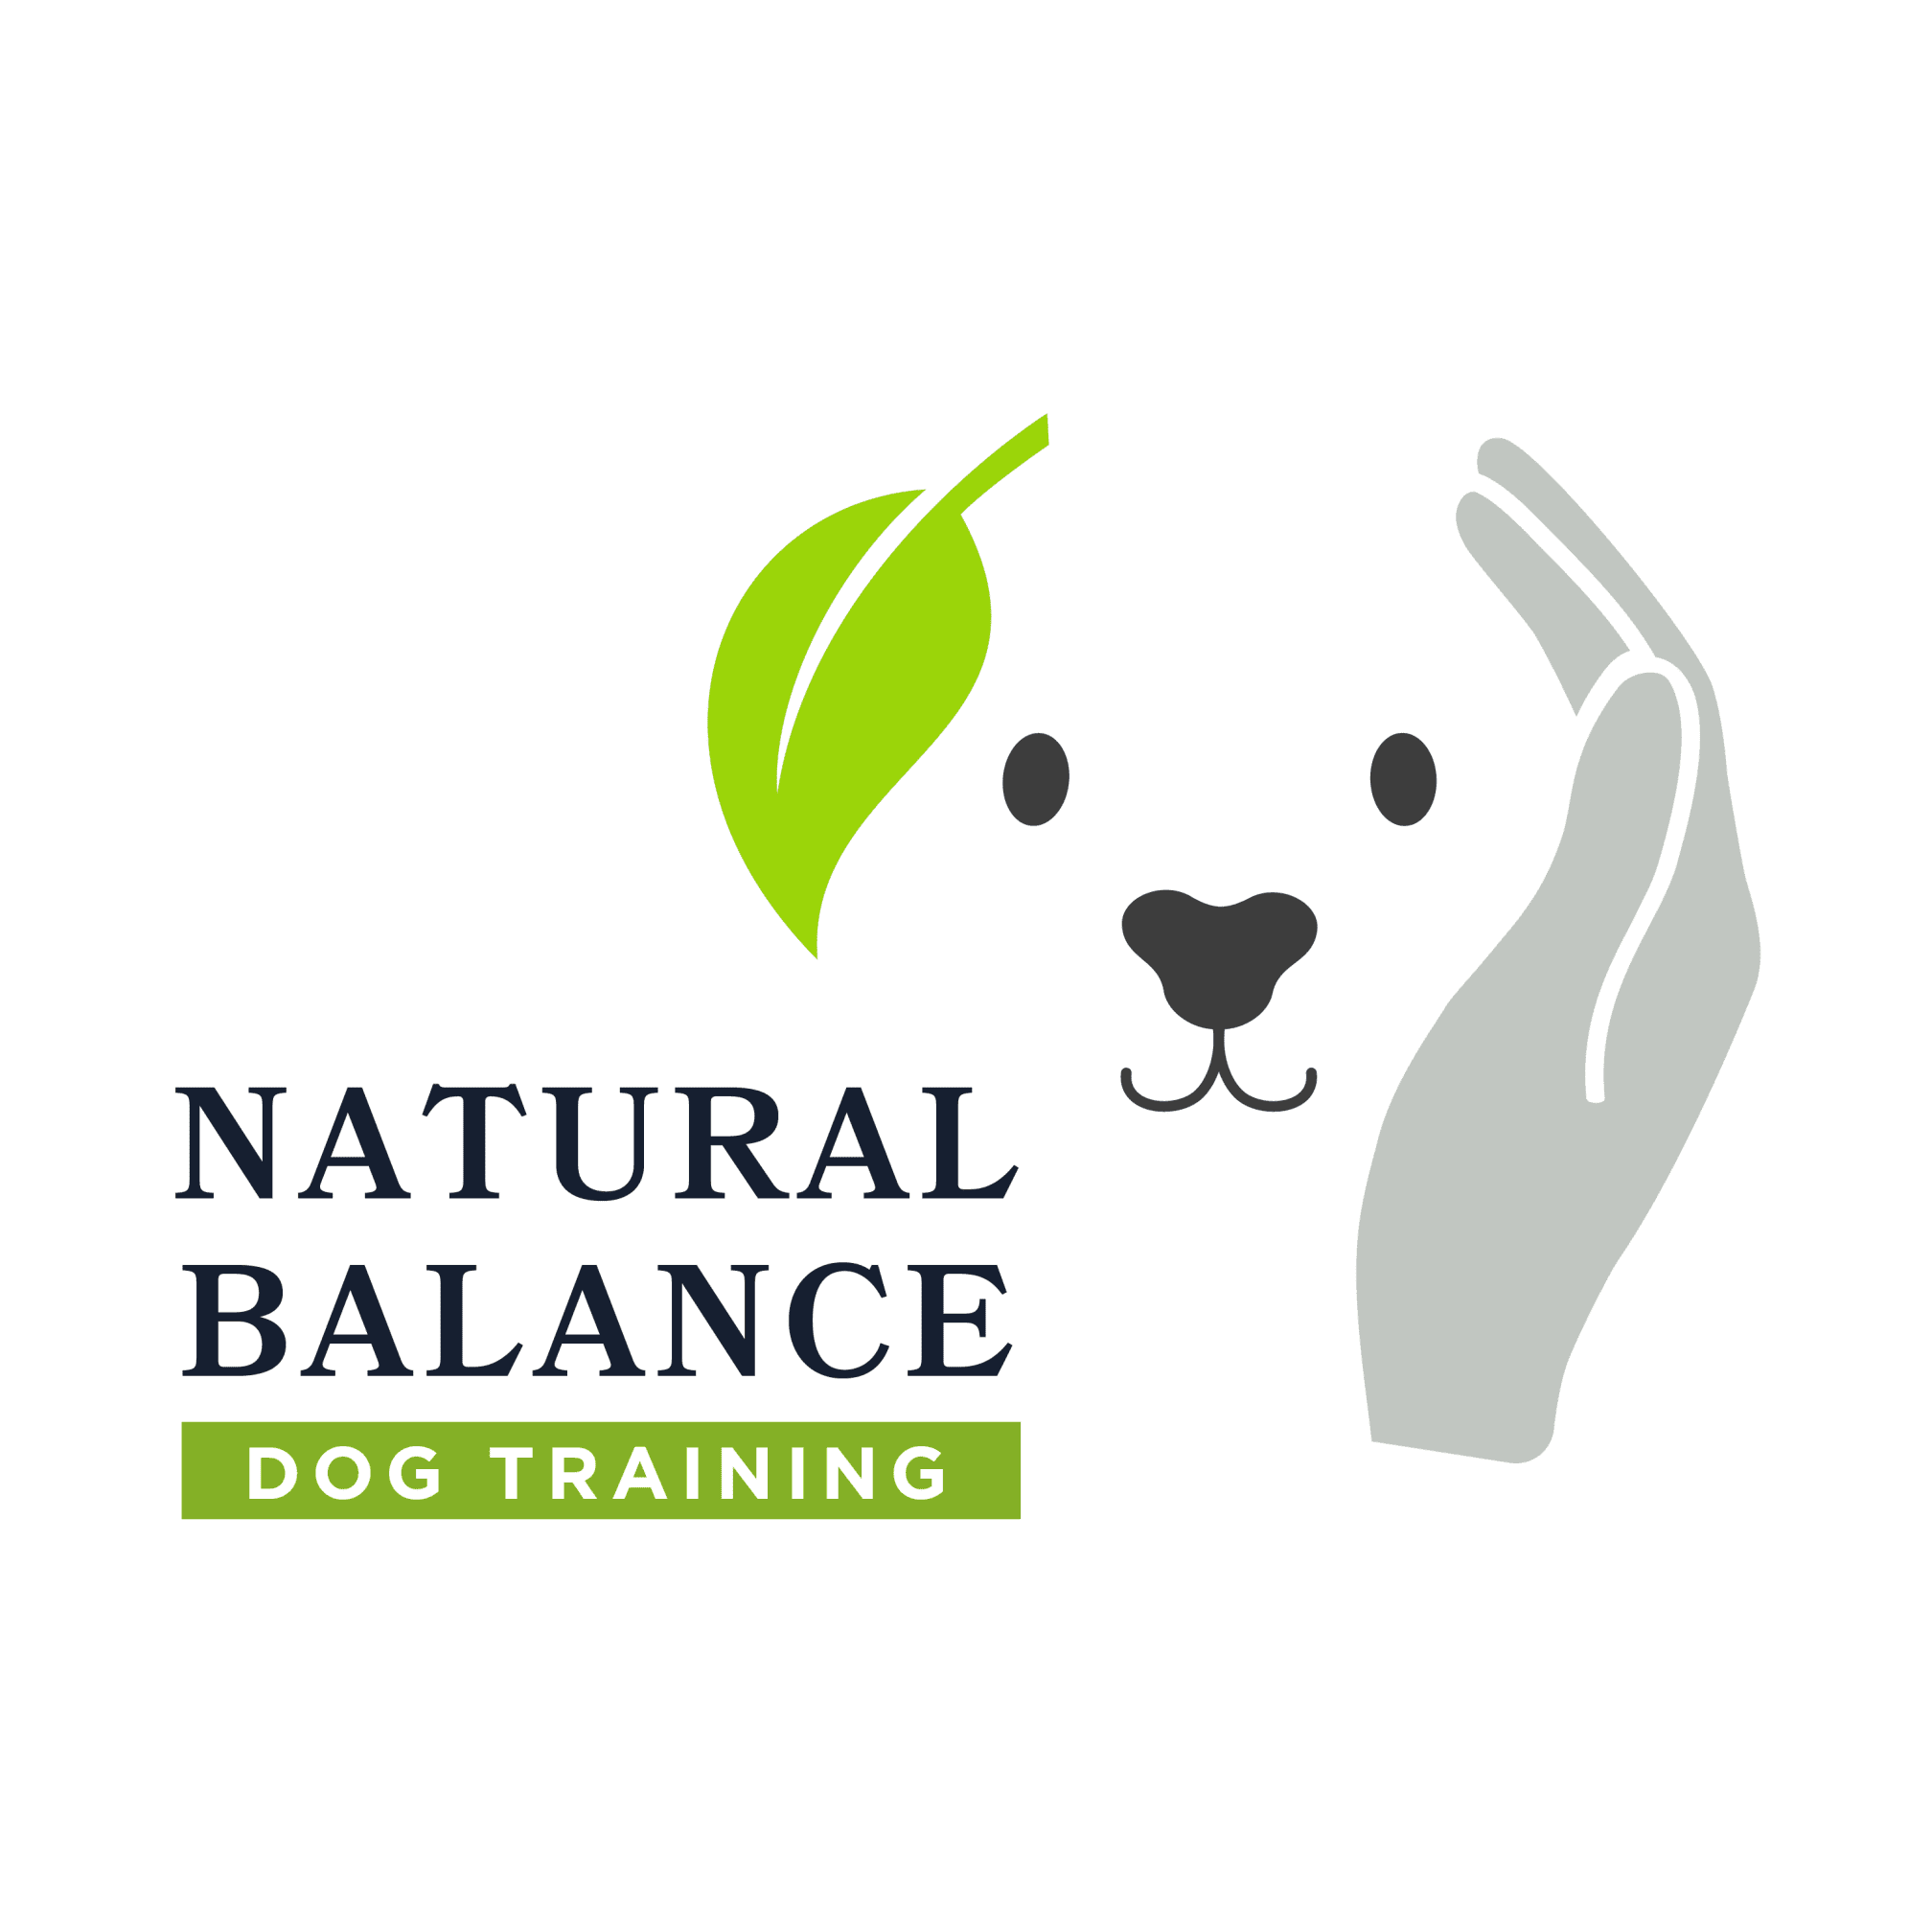 Natural Balance Dog Training Logo